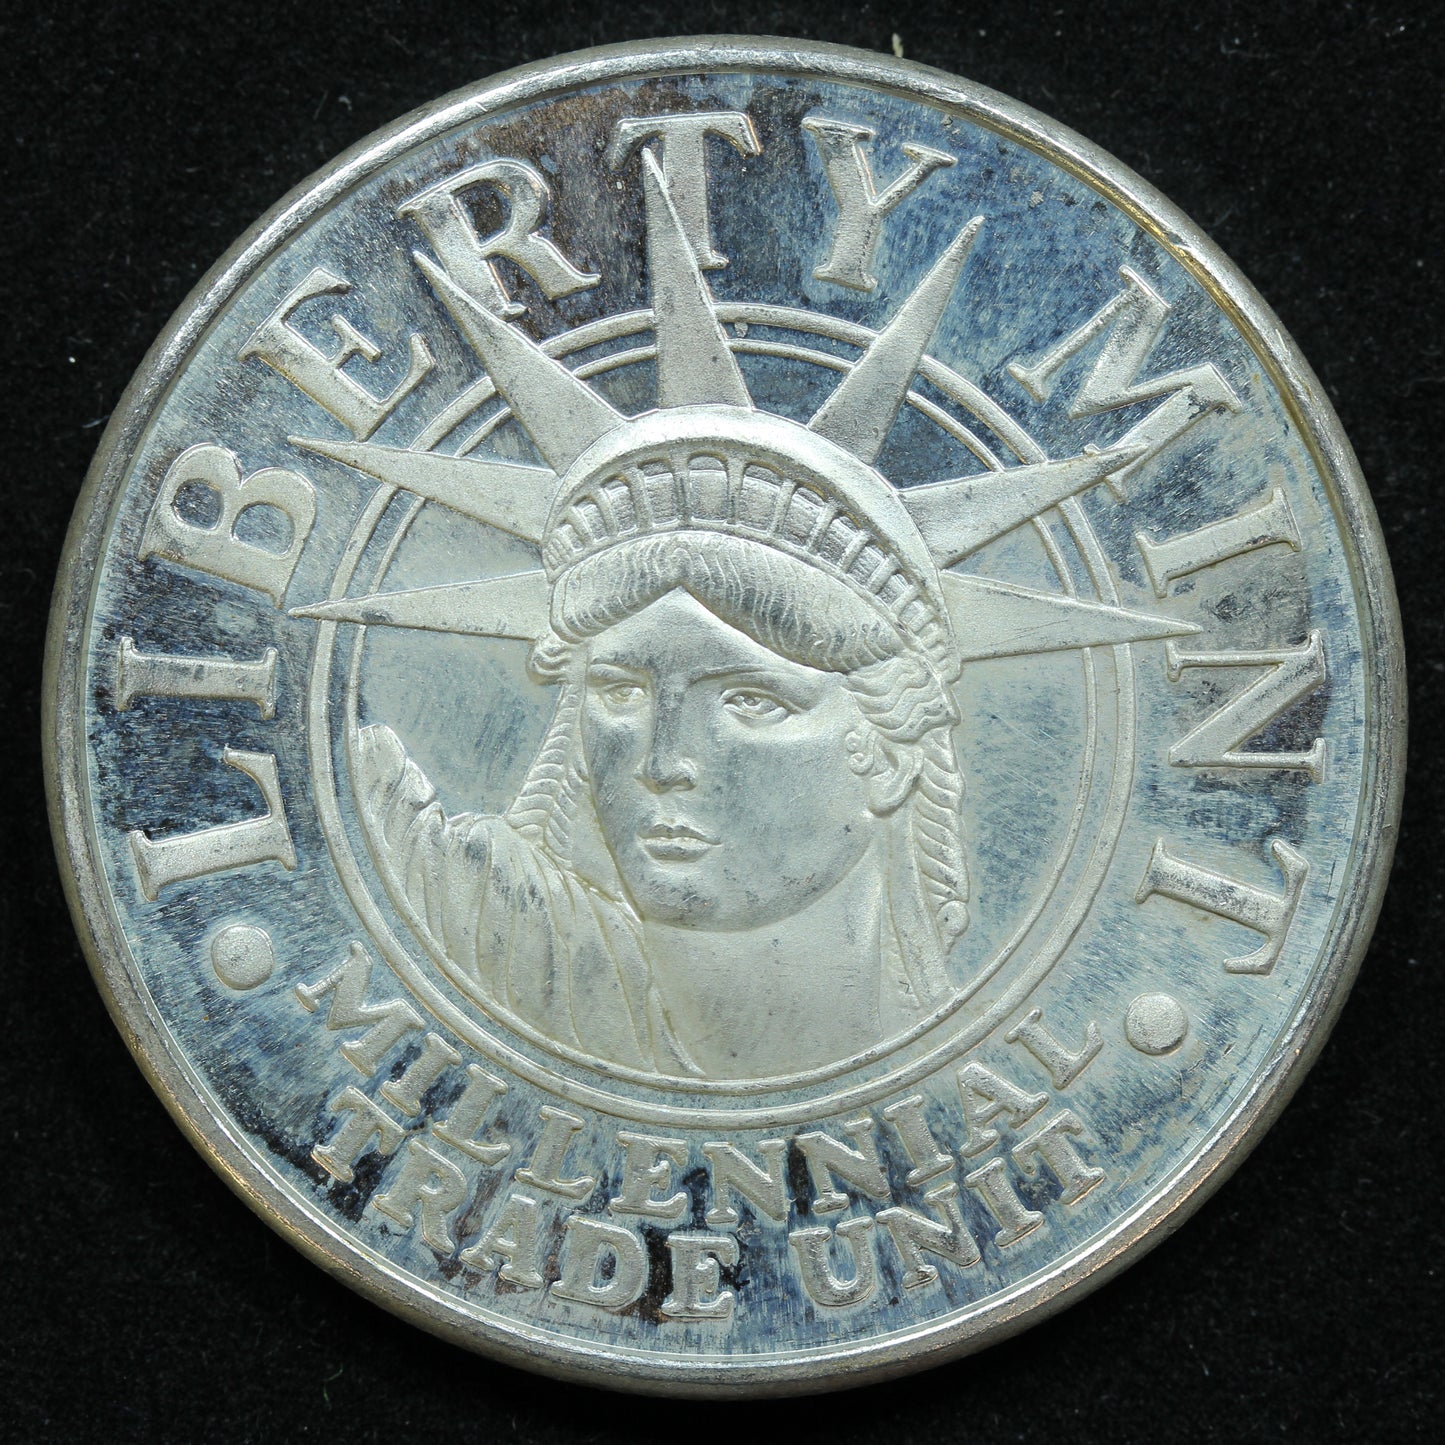 1 oz .999 Fine Silver - Liberty Mint Millennial Trade Unit - Spotting/Scratches